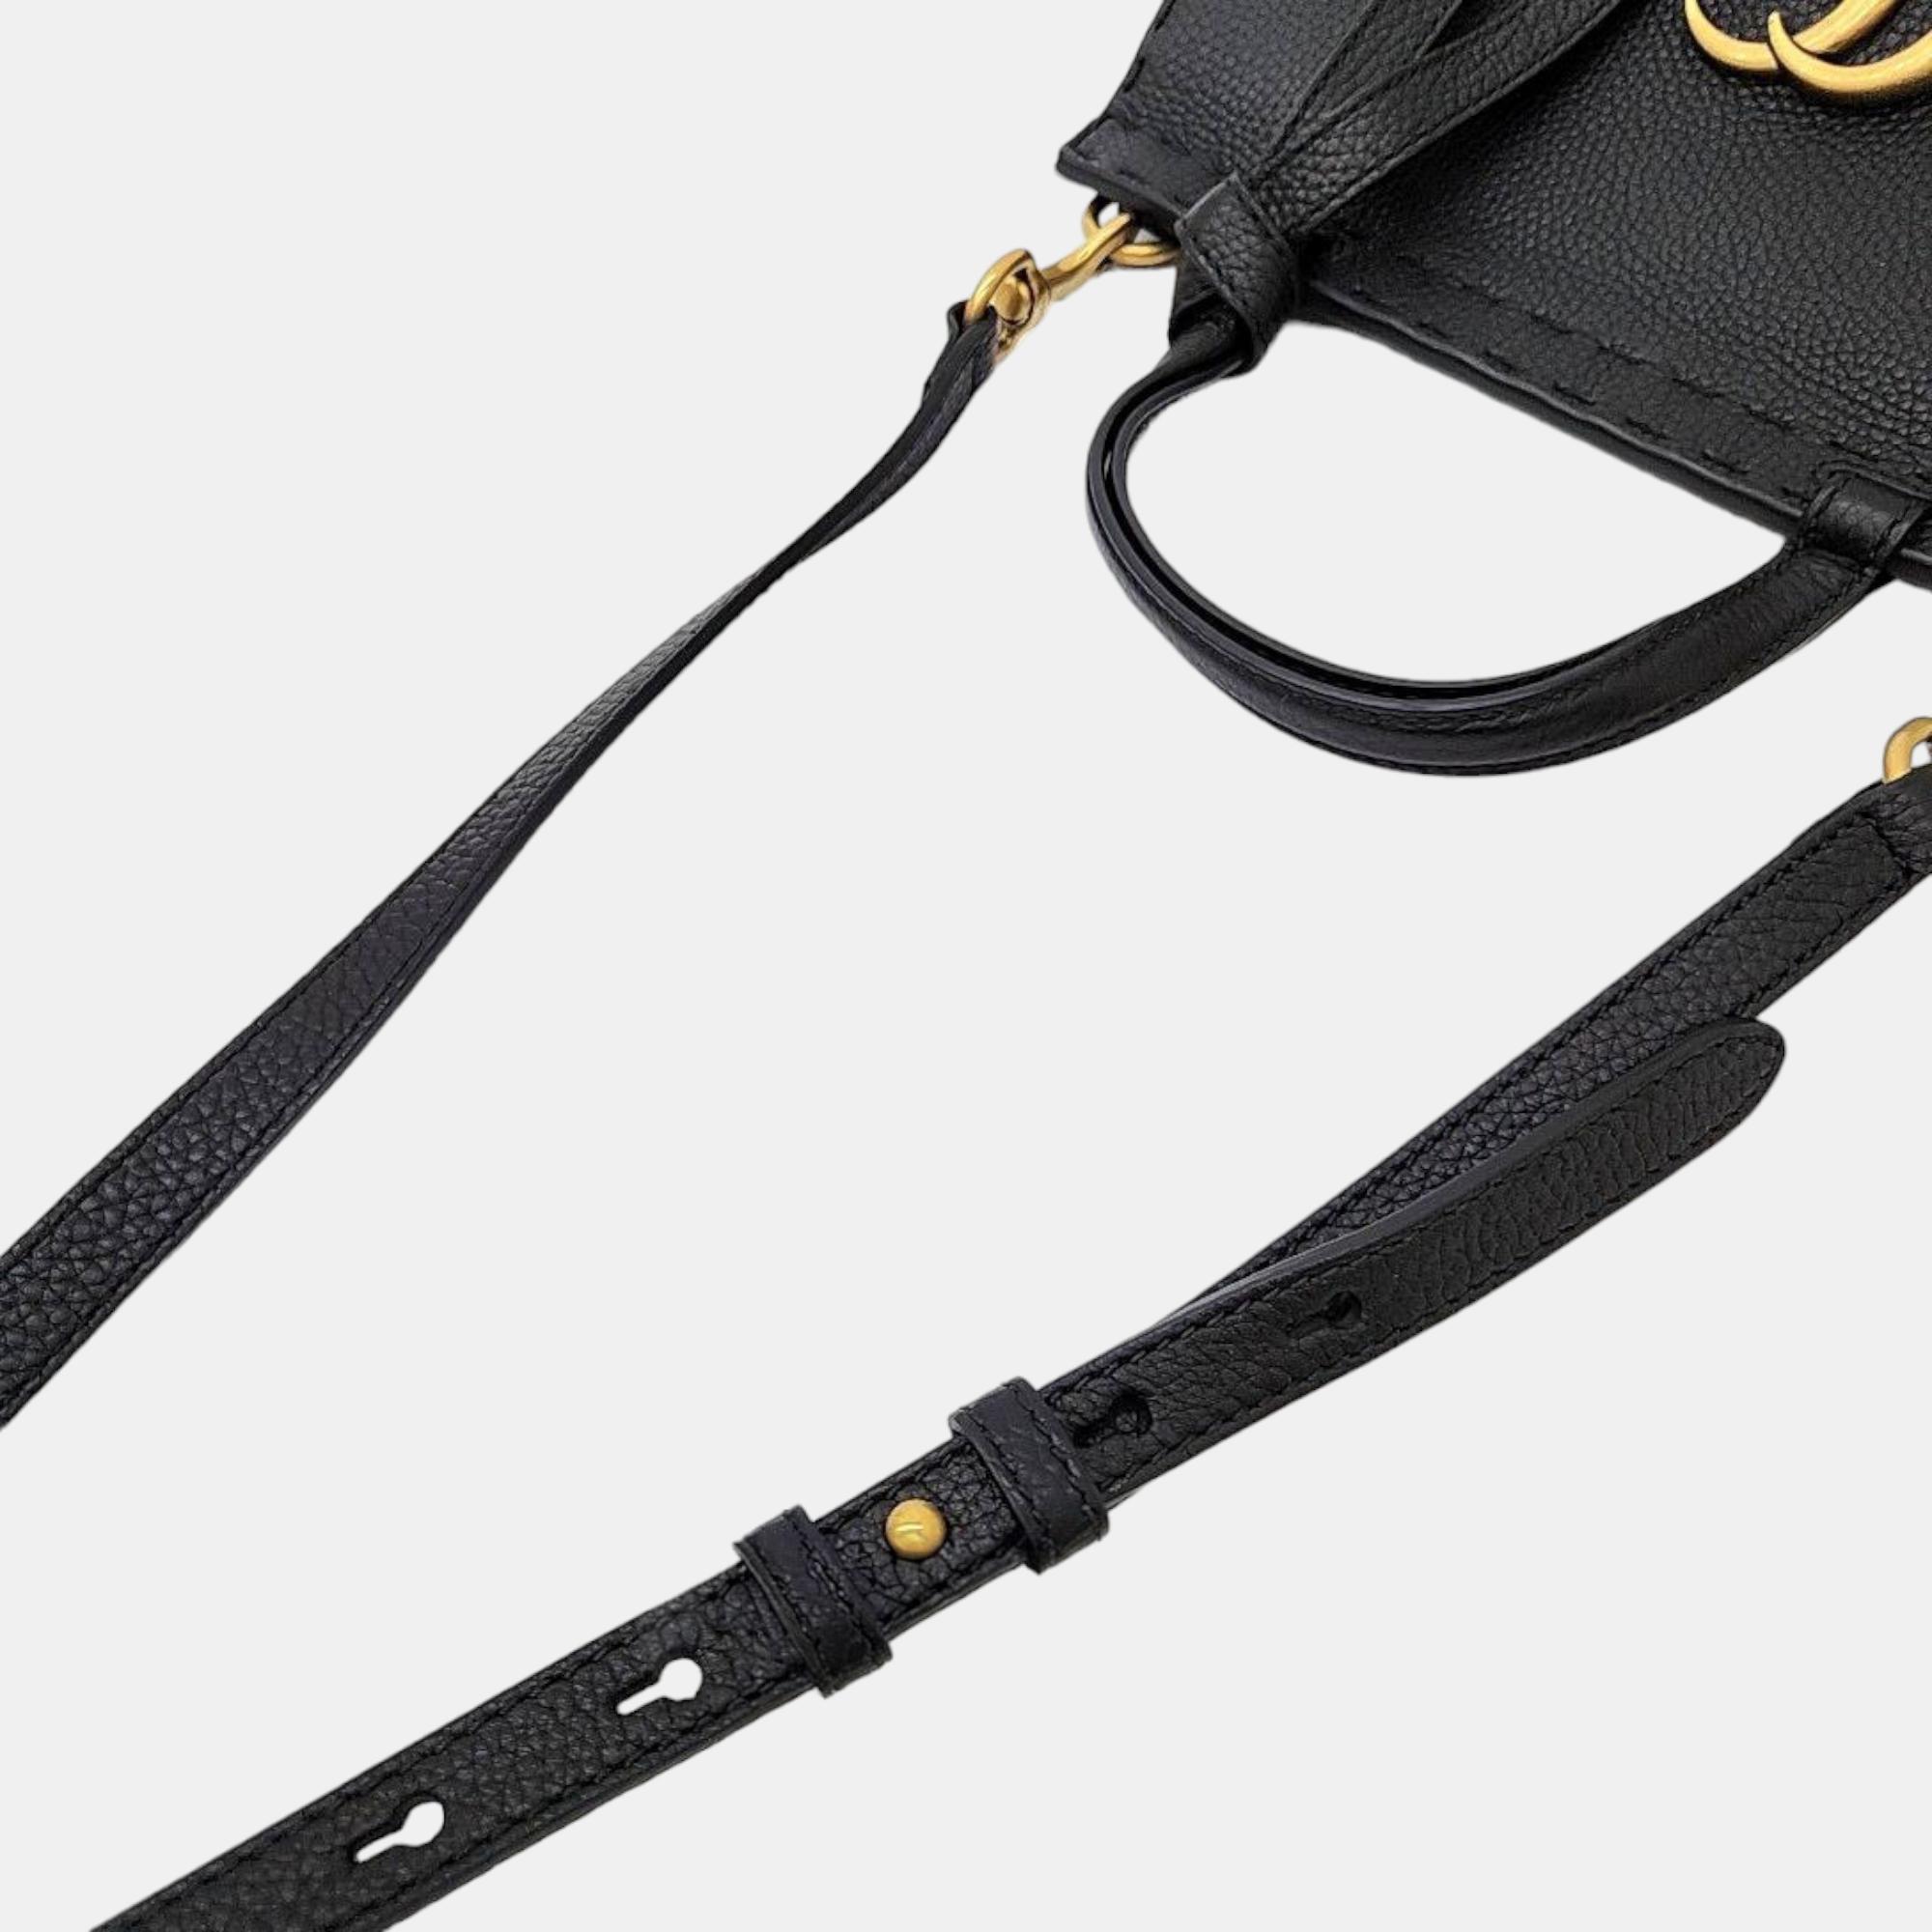 Gucci GG Marmont Mini Tote And Shoulder Bag (442622)